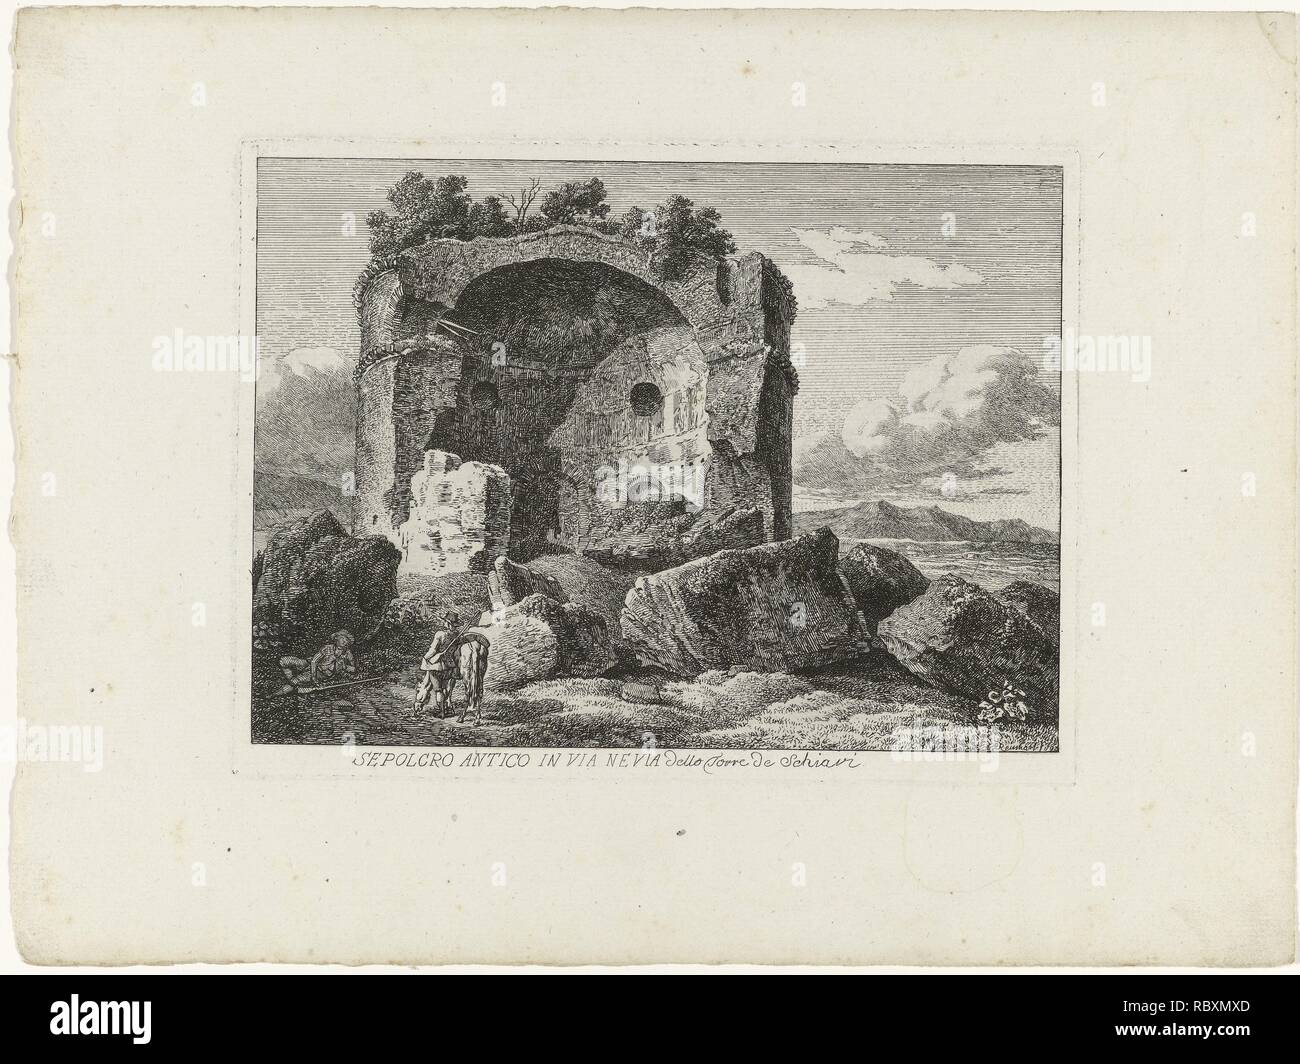 Antique tomb on Via Nevia, called the Torre de 'Schiavi, Johann Christian Reinhart, 1792.jpg - RBXMXD Stock Photo